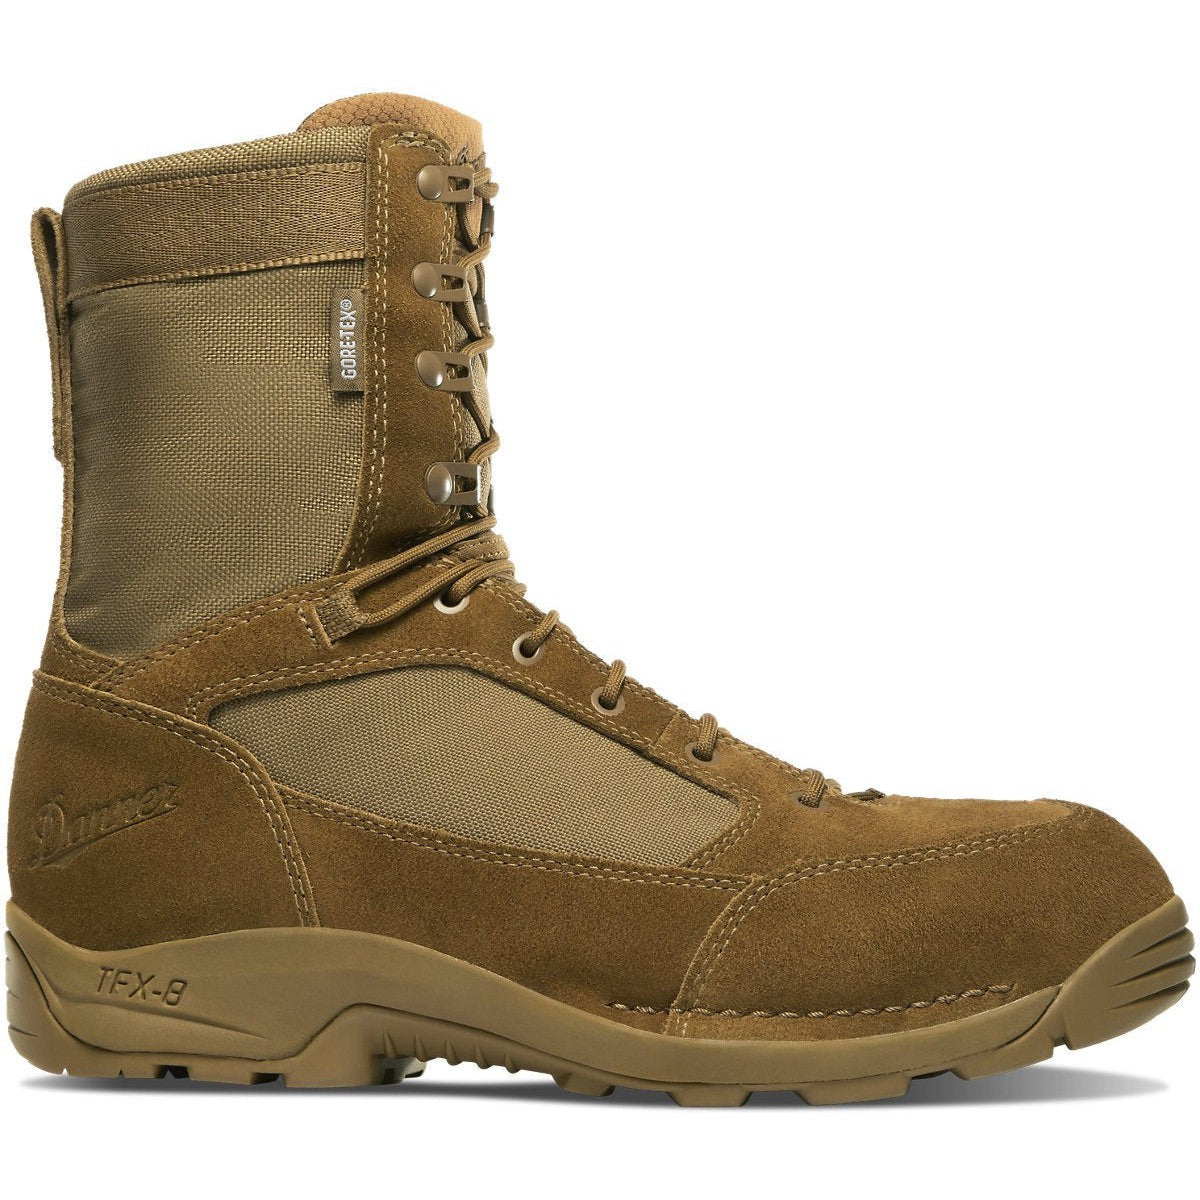 Danner Men's Desert TFX G3 8" Plain Toe WP Military Boot -Coyote- 24323 6 / Medium / Coyote - Overlook Boots